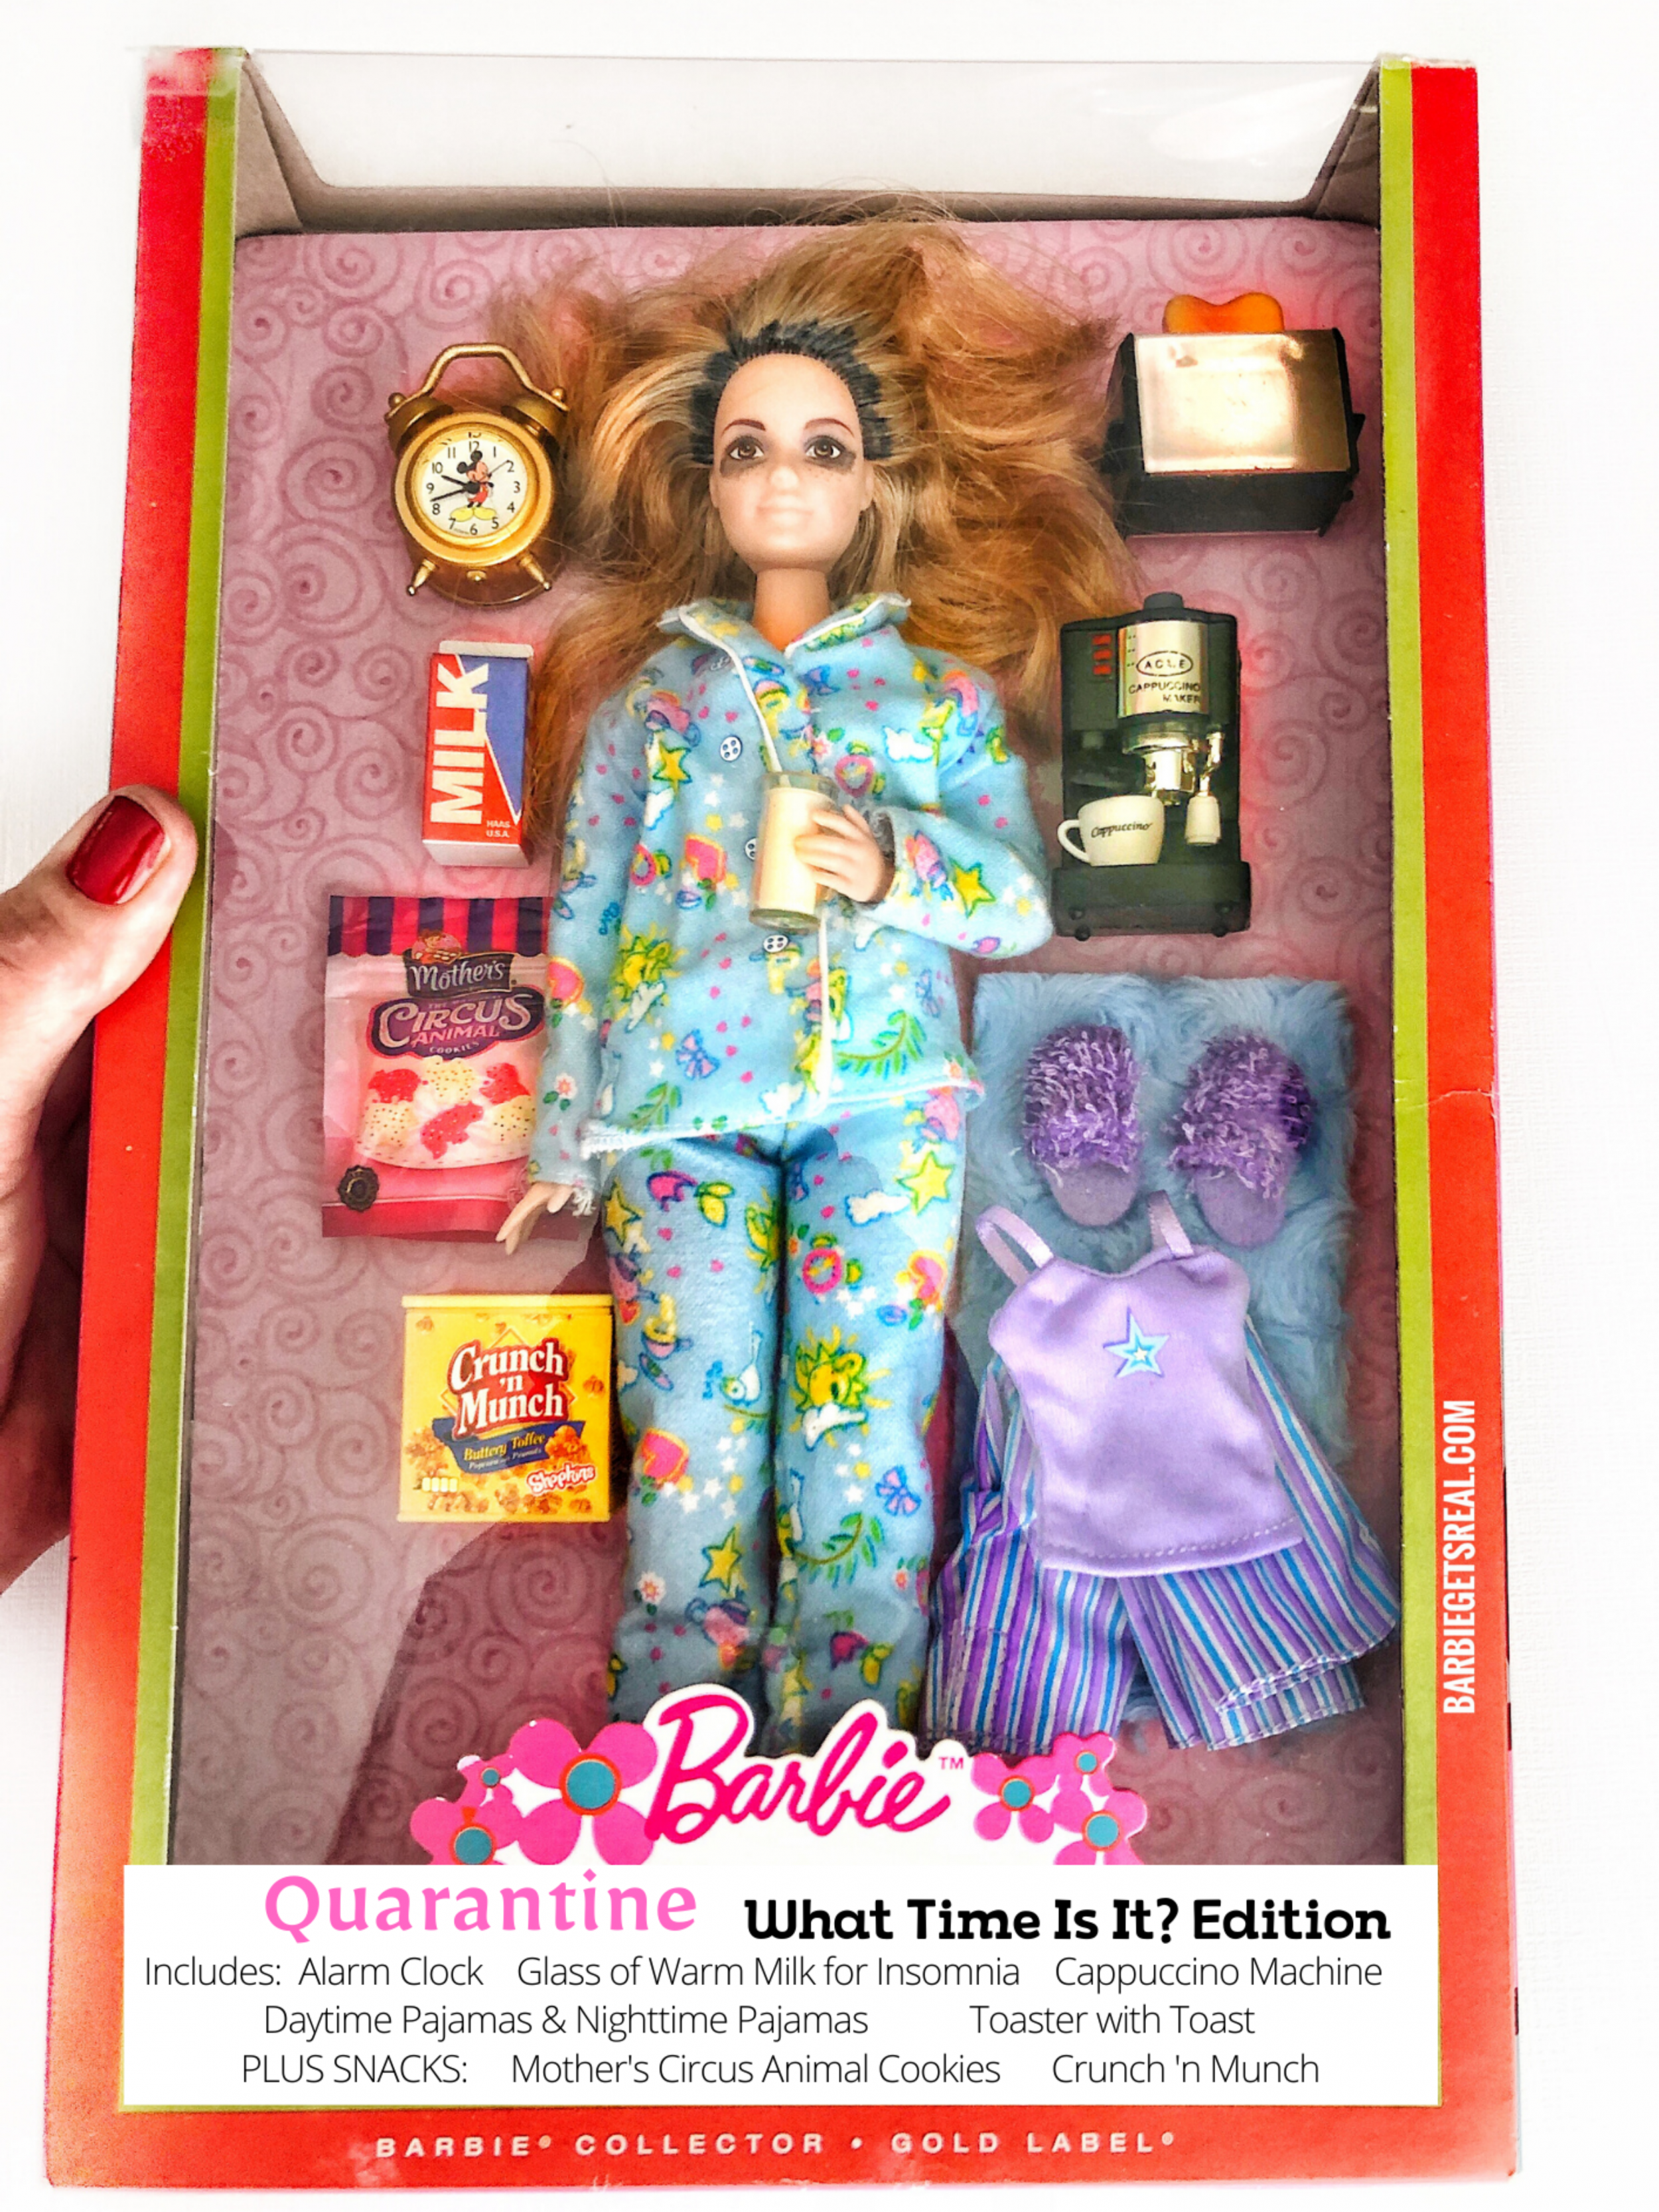 spanish teacher barbie